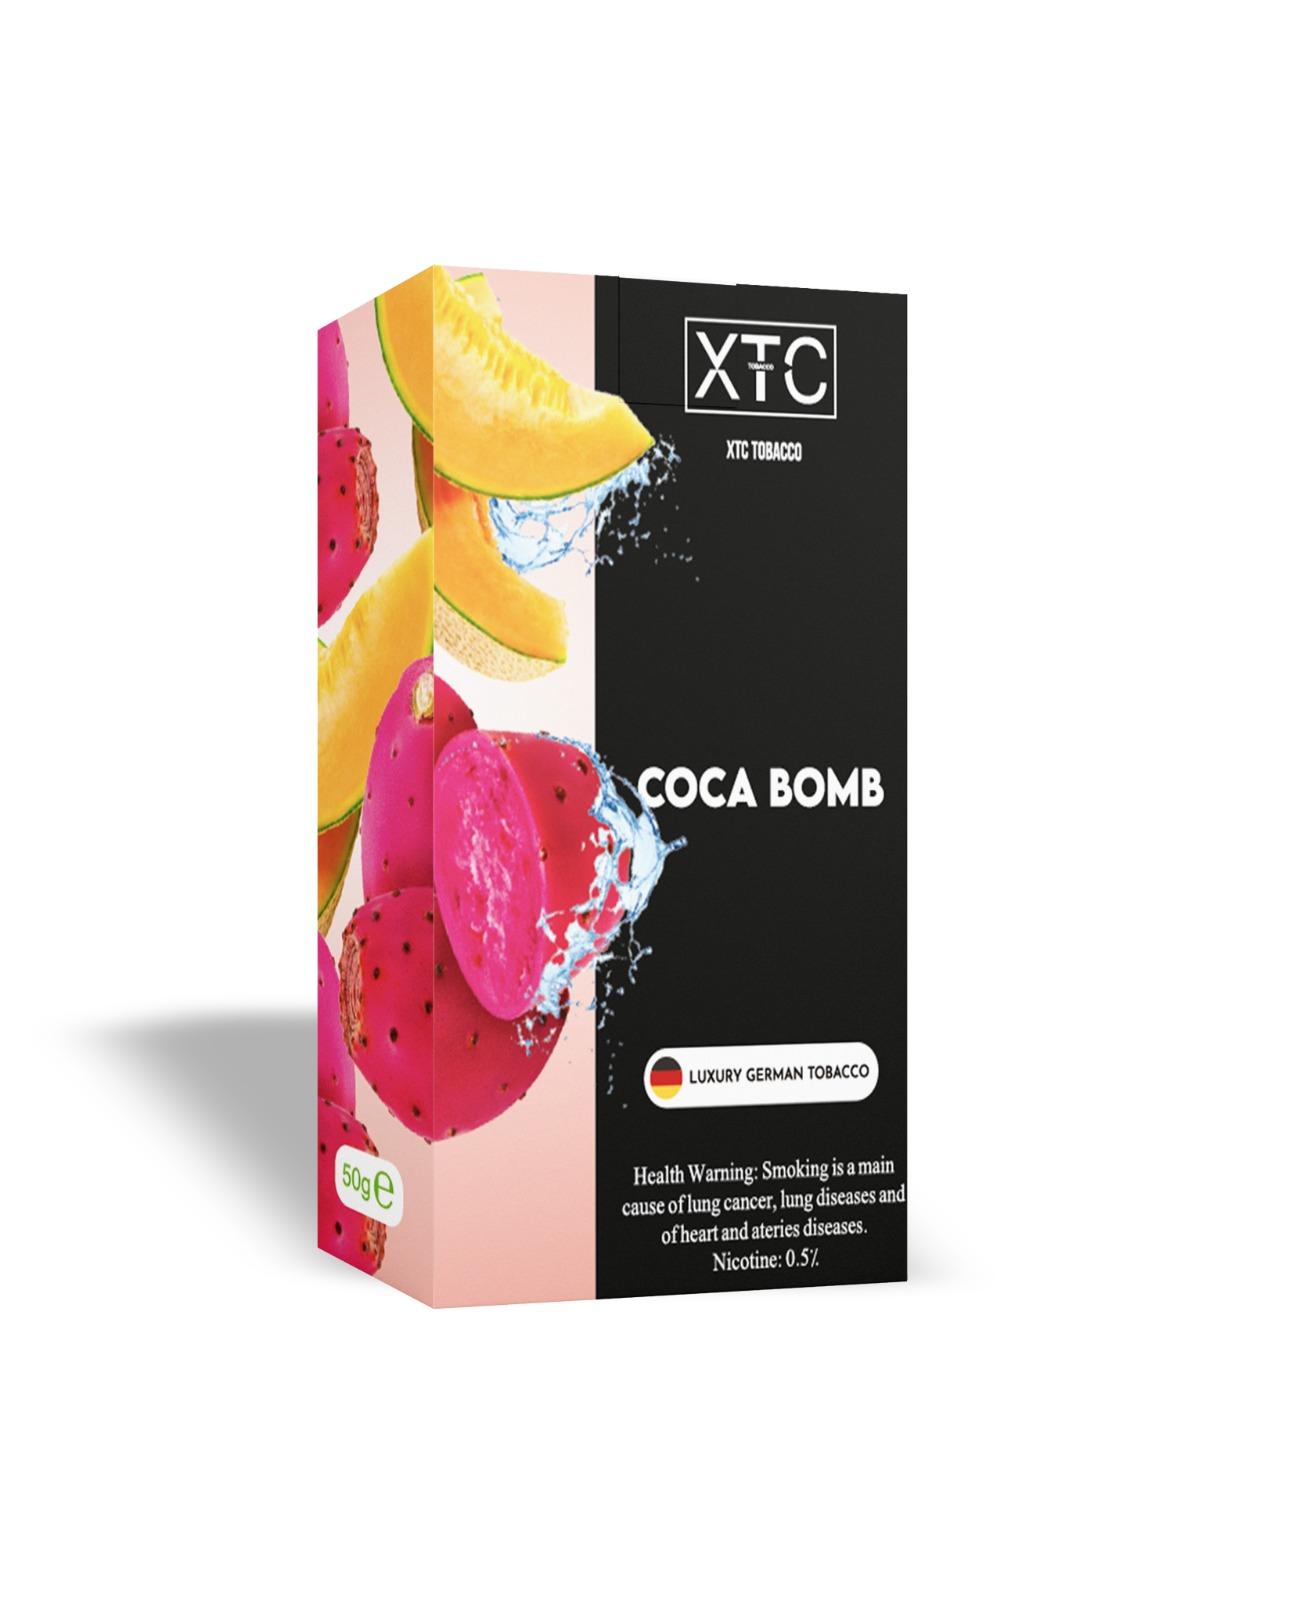 Image of XTC Tobacco product Coca Bomb